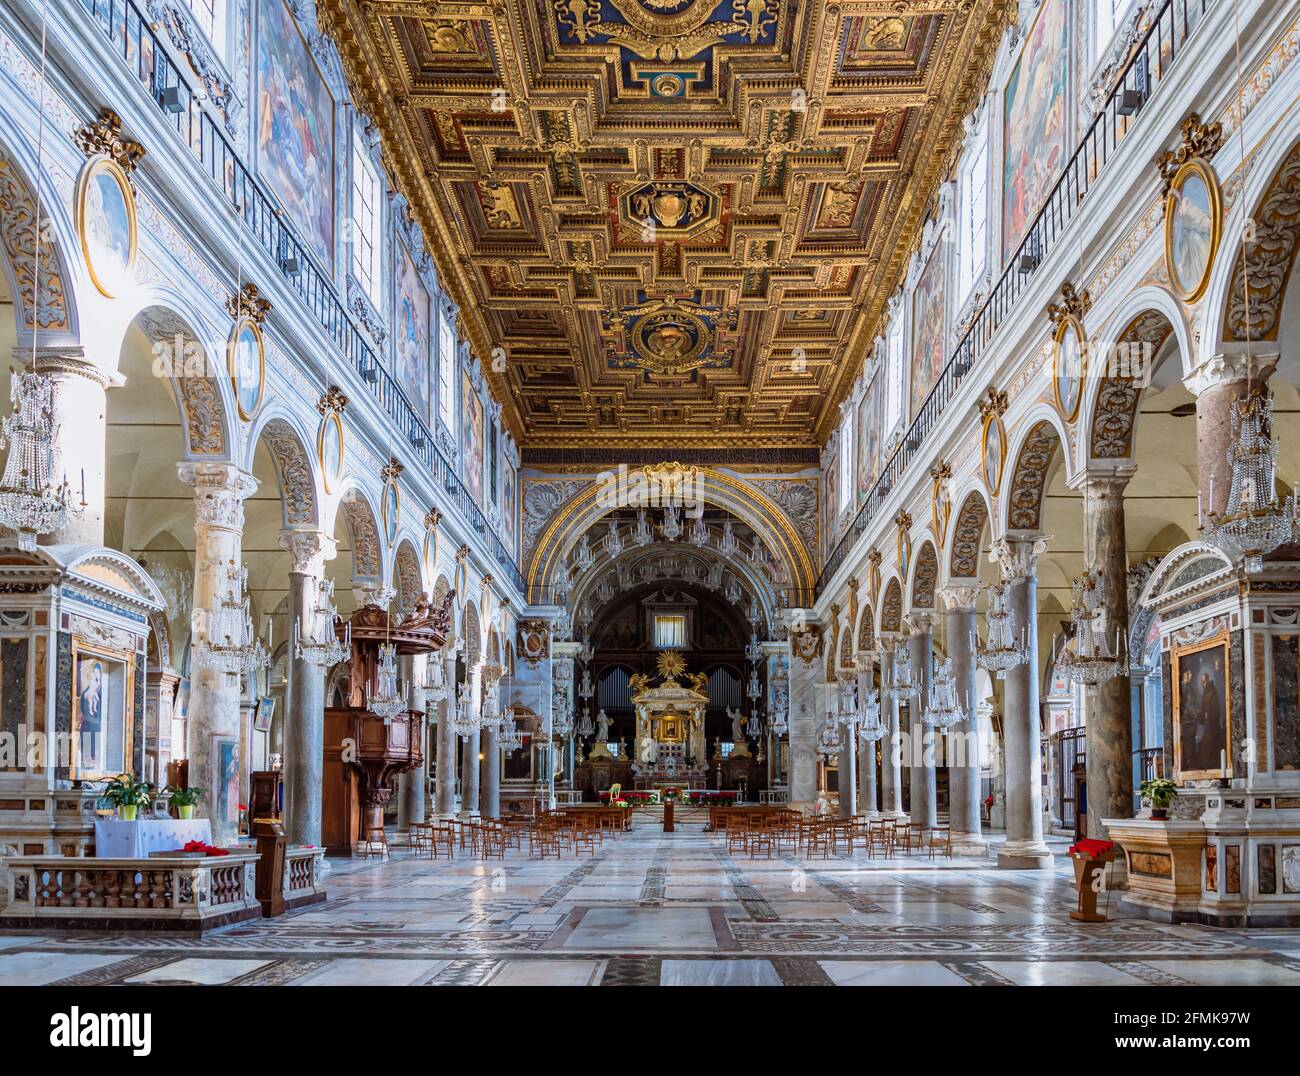 Vista de la lujosa nave de la catedral católica de Roma Foto de stock